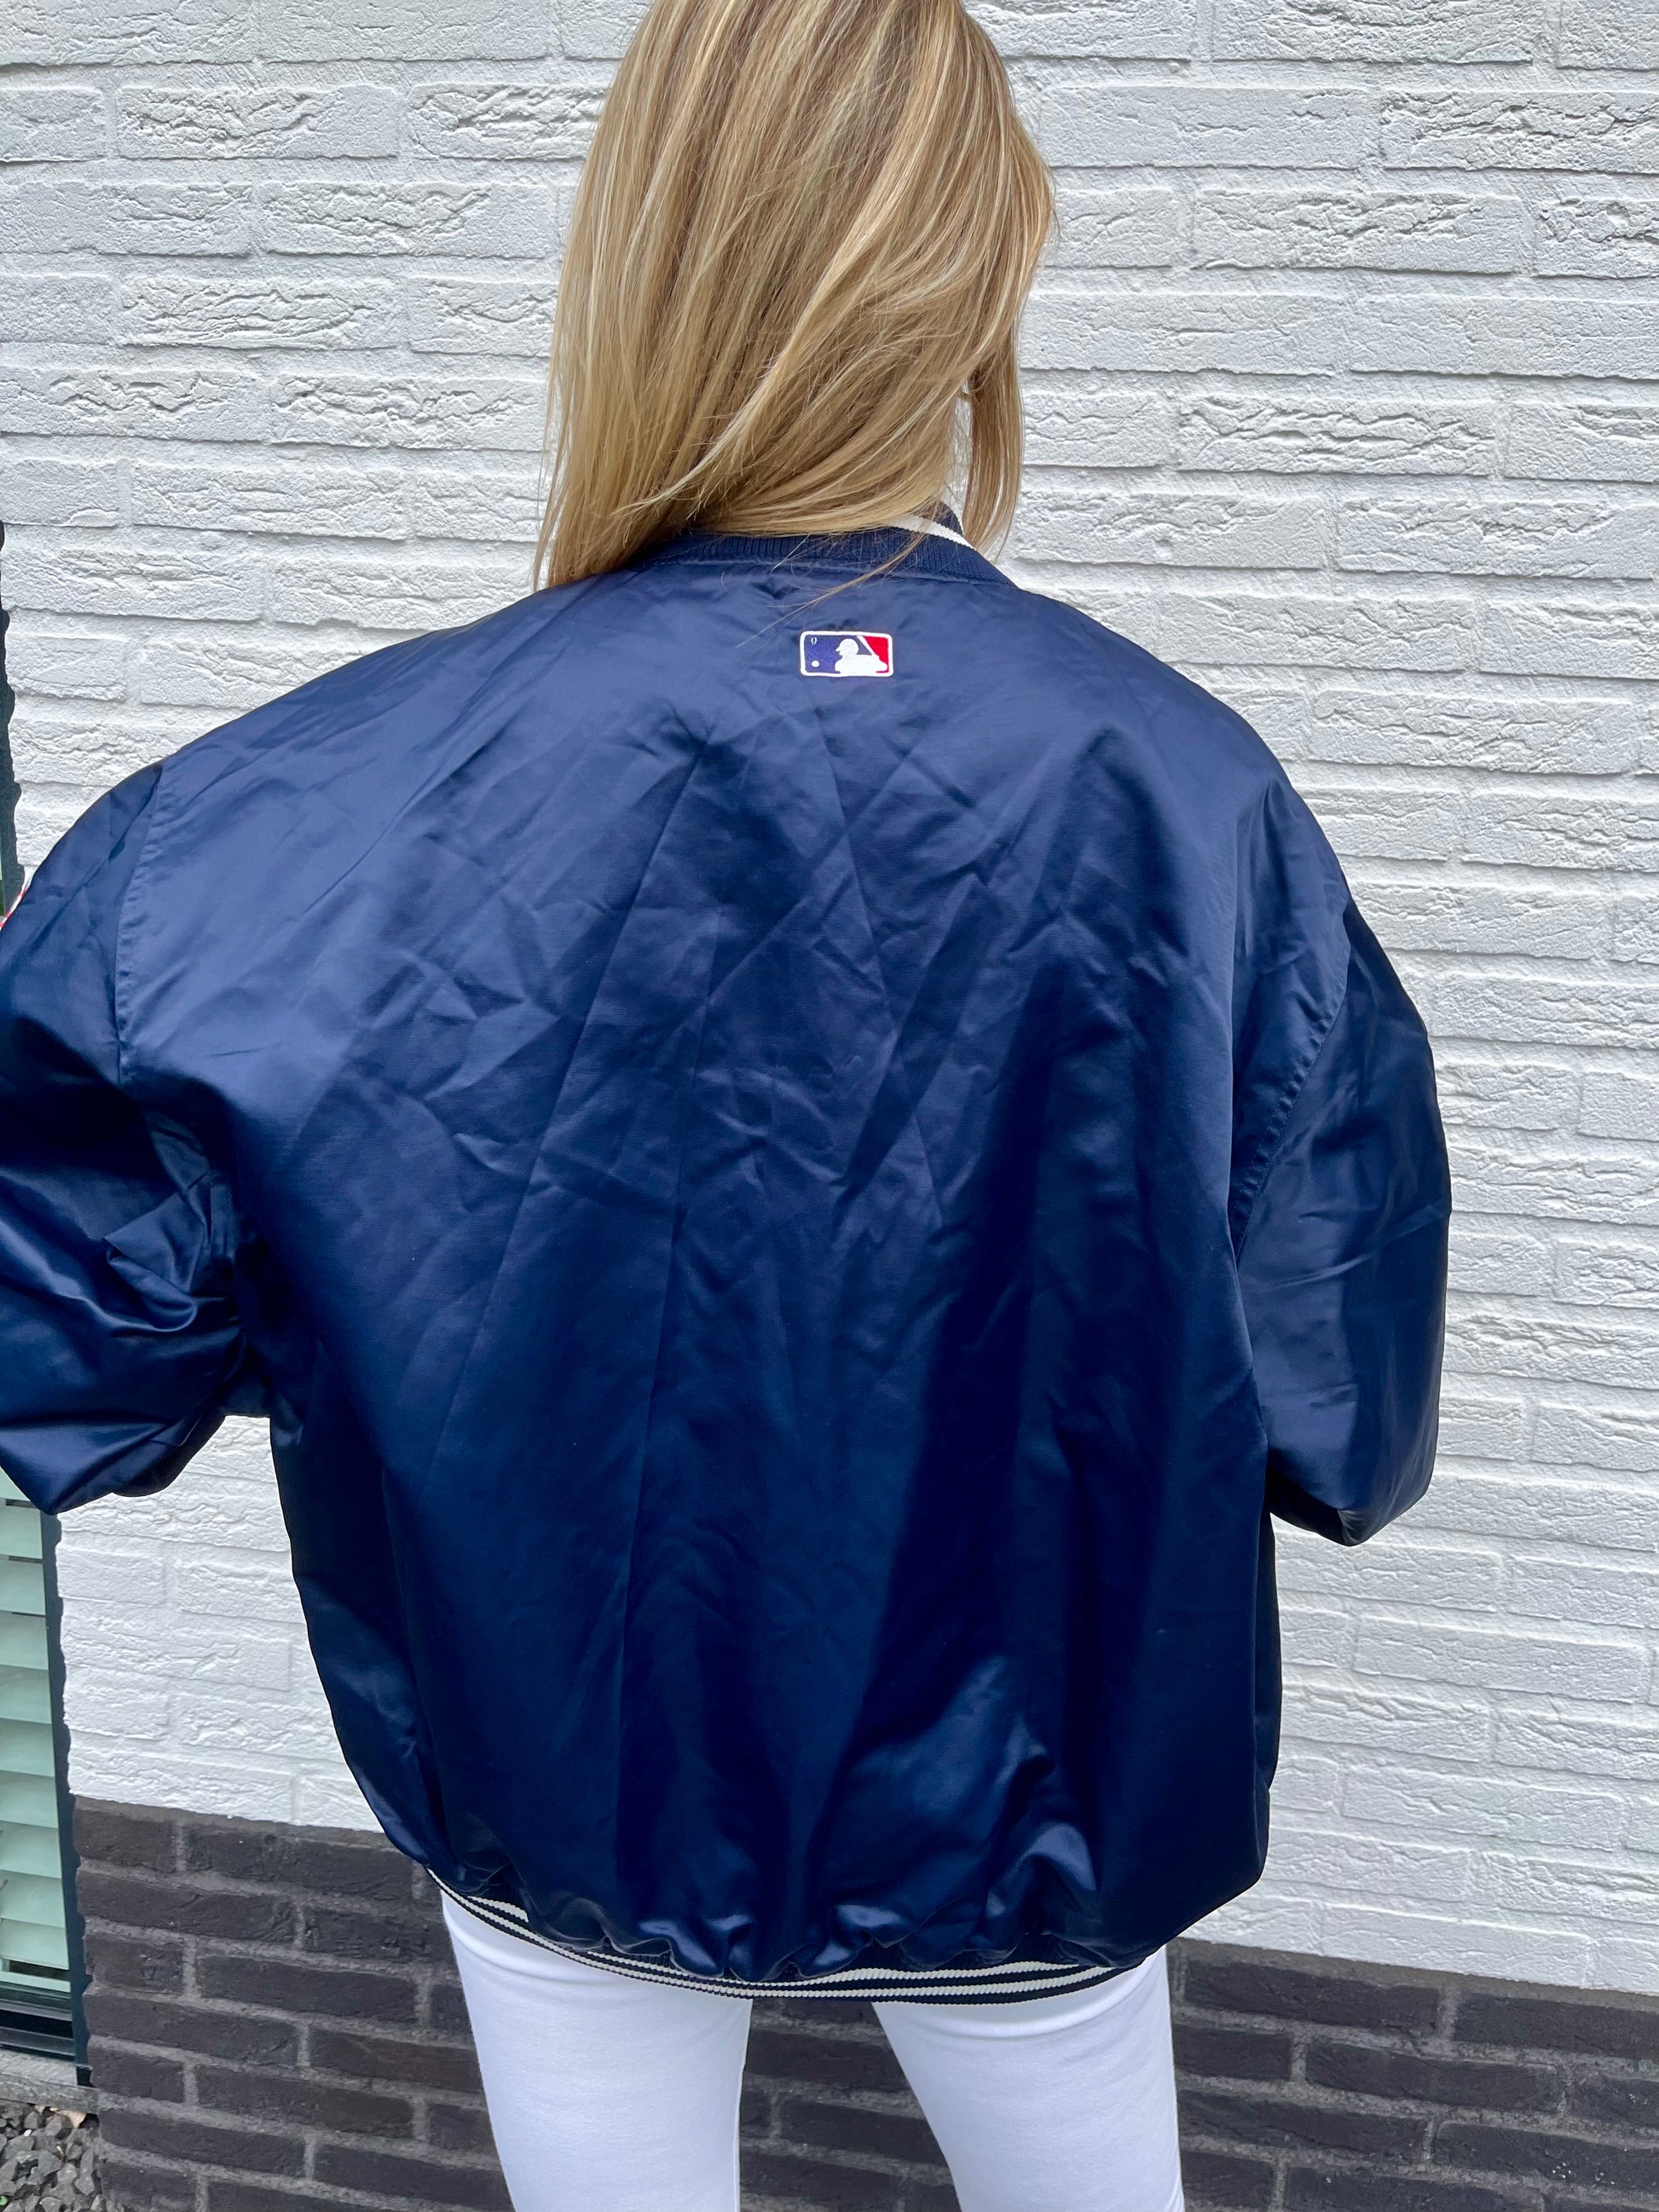 NY Yankees spell-out satin jacket